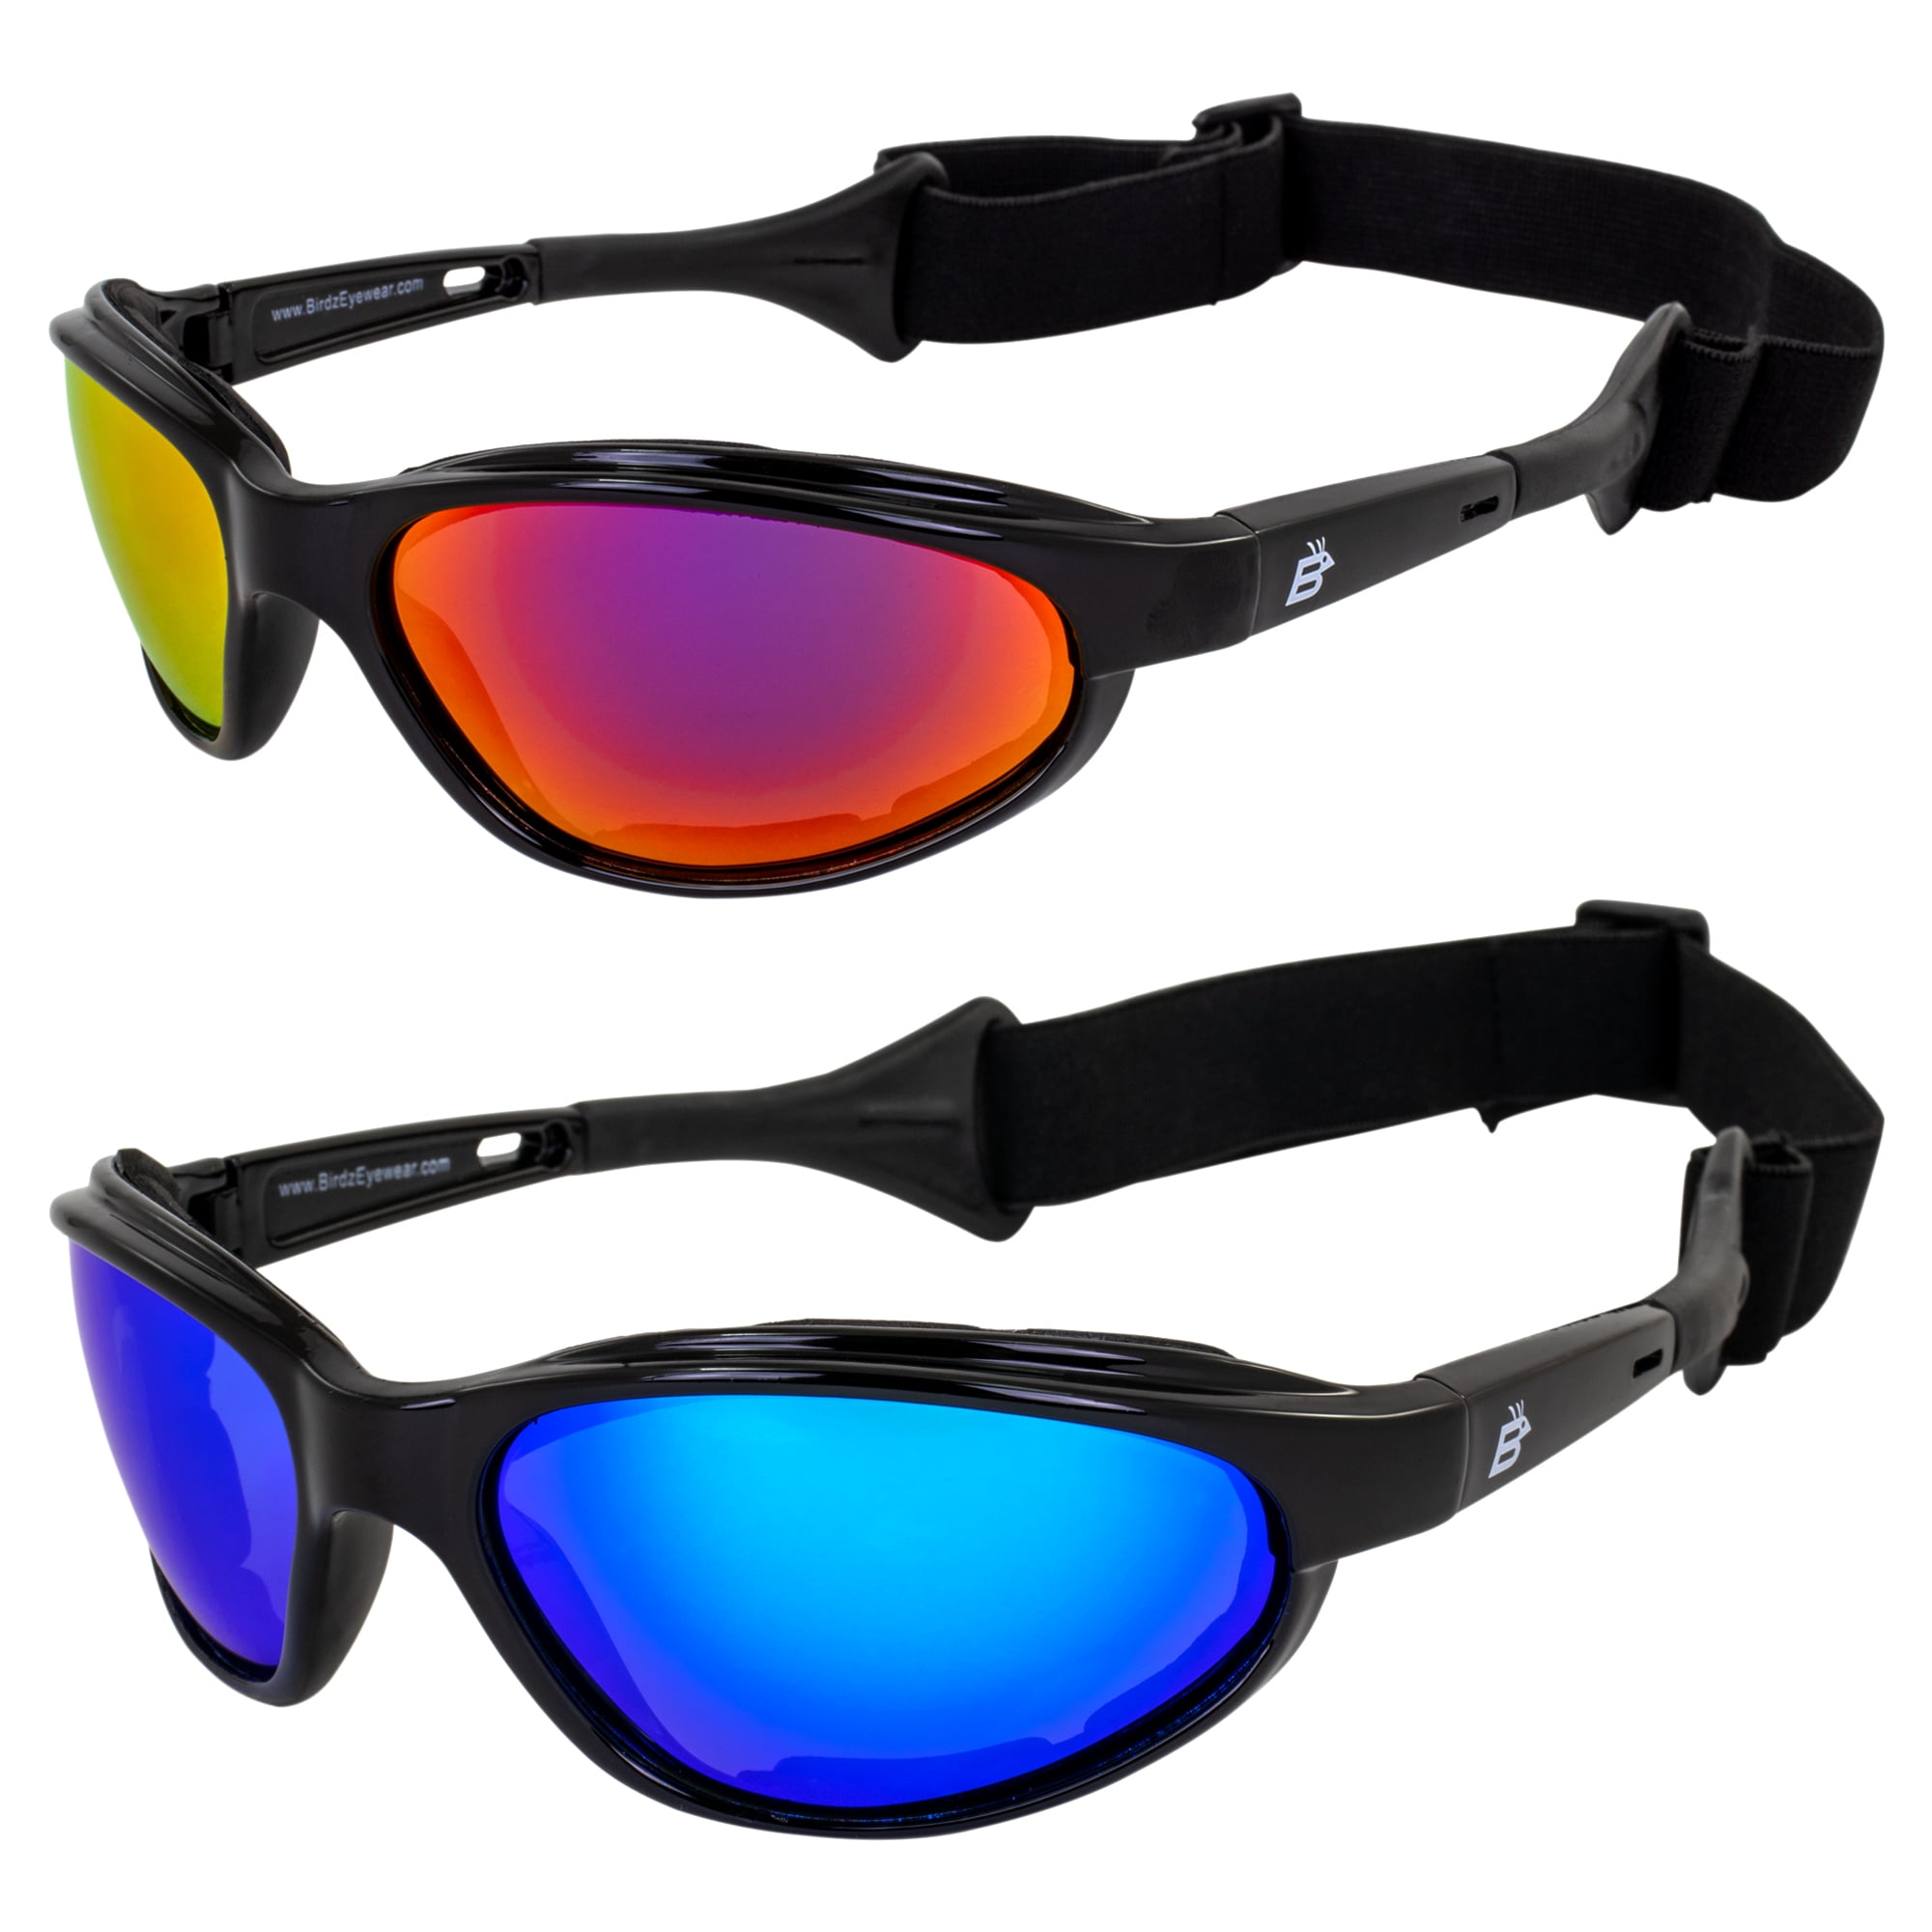 Birdz Eyewear Sail Padded Jetski Sunglasses Goggles Polarized